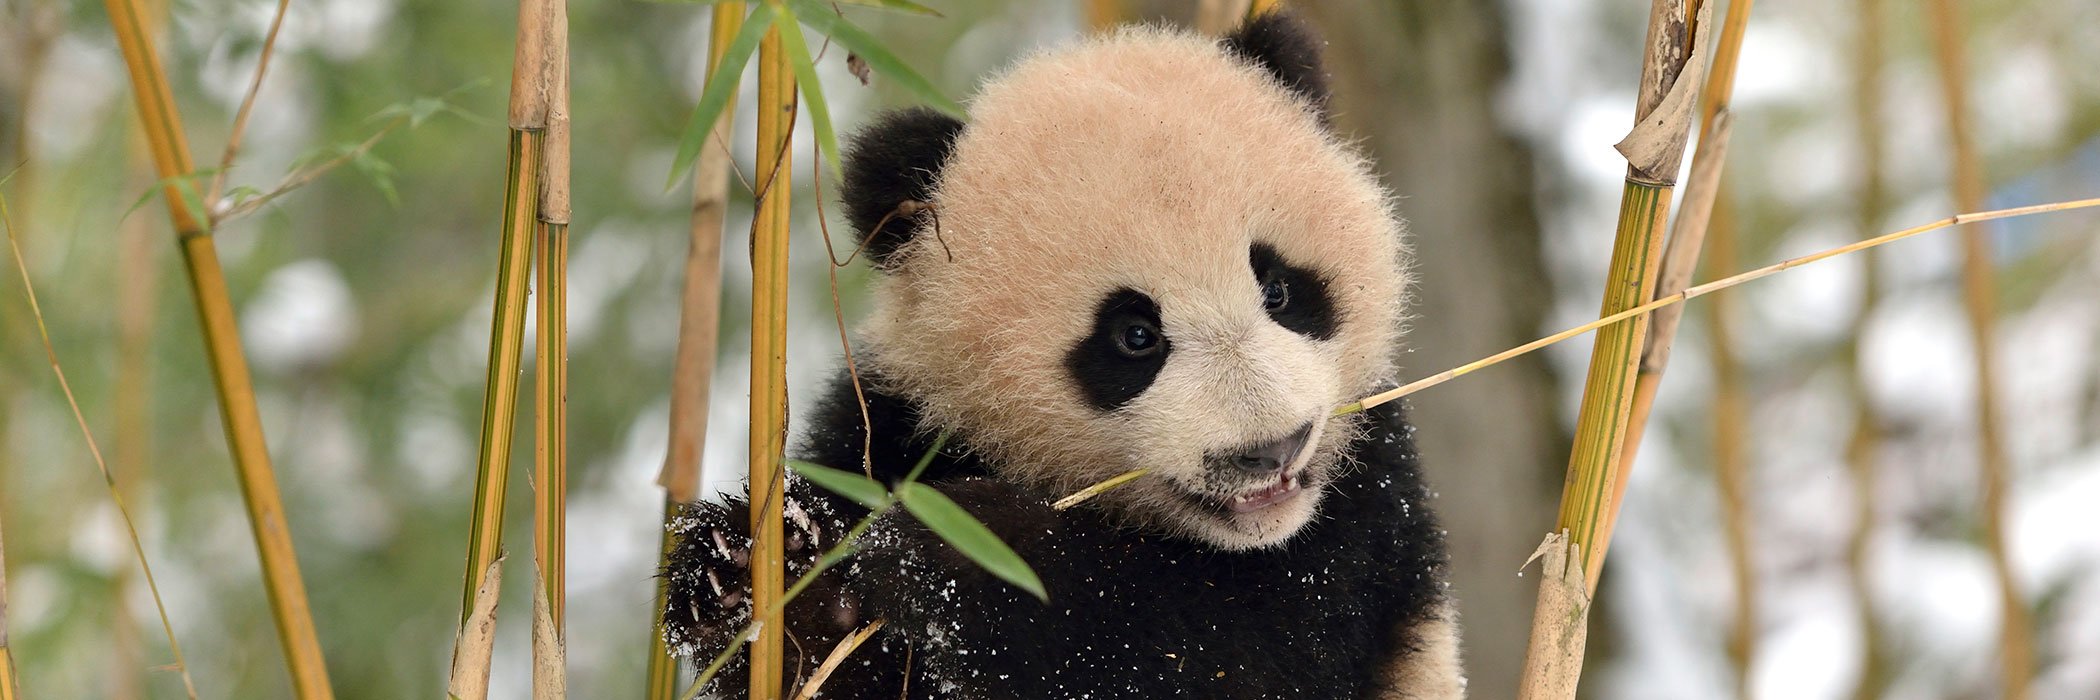 	 Giant panda cub in snow among bamboo